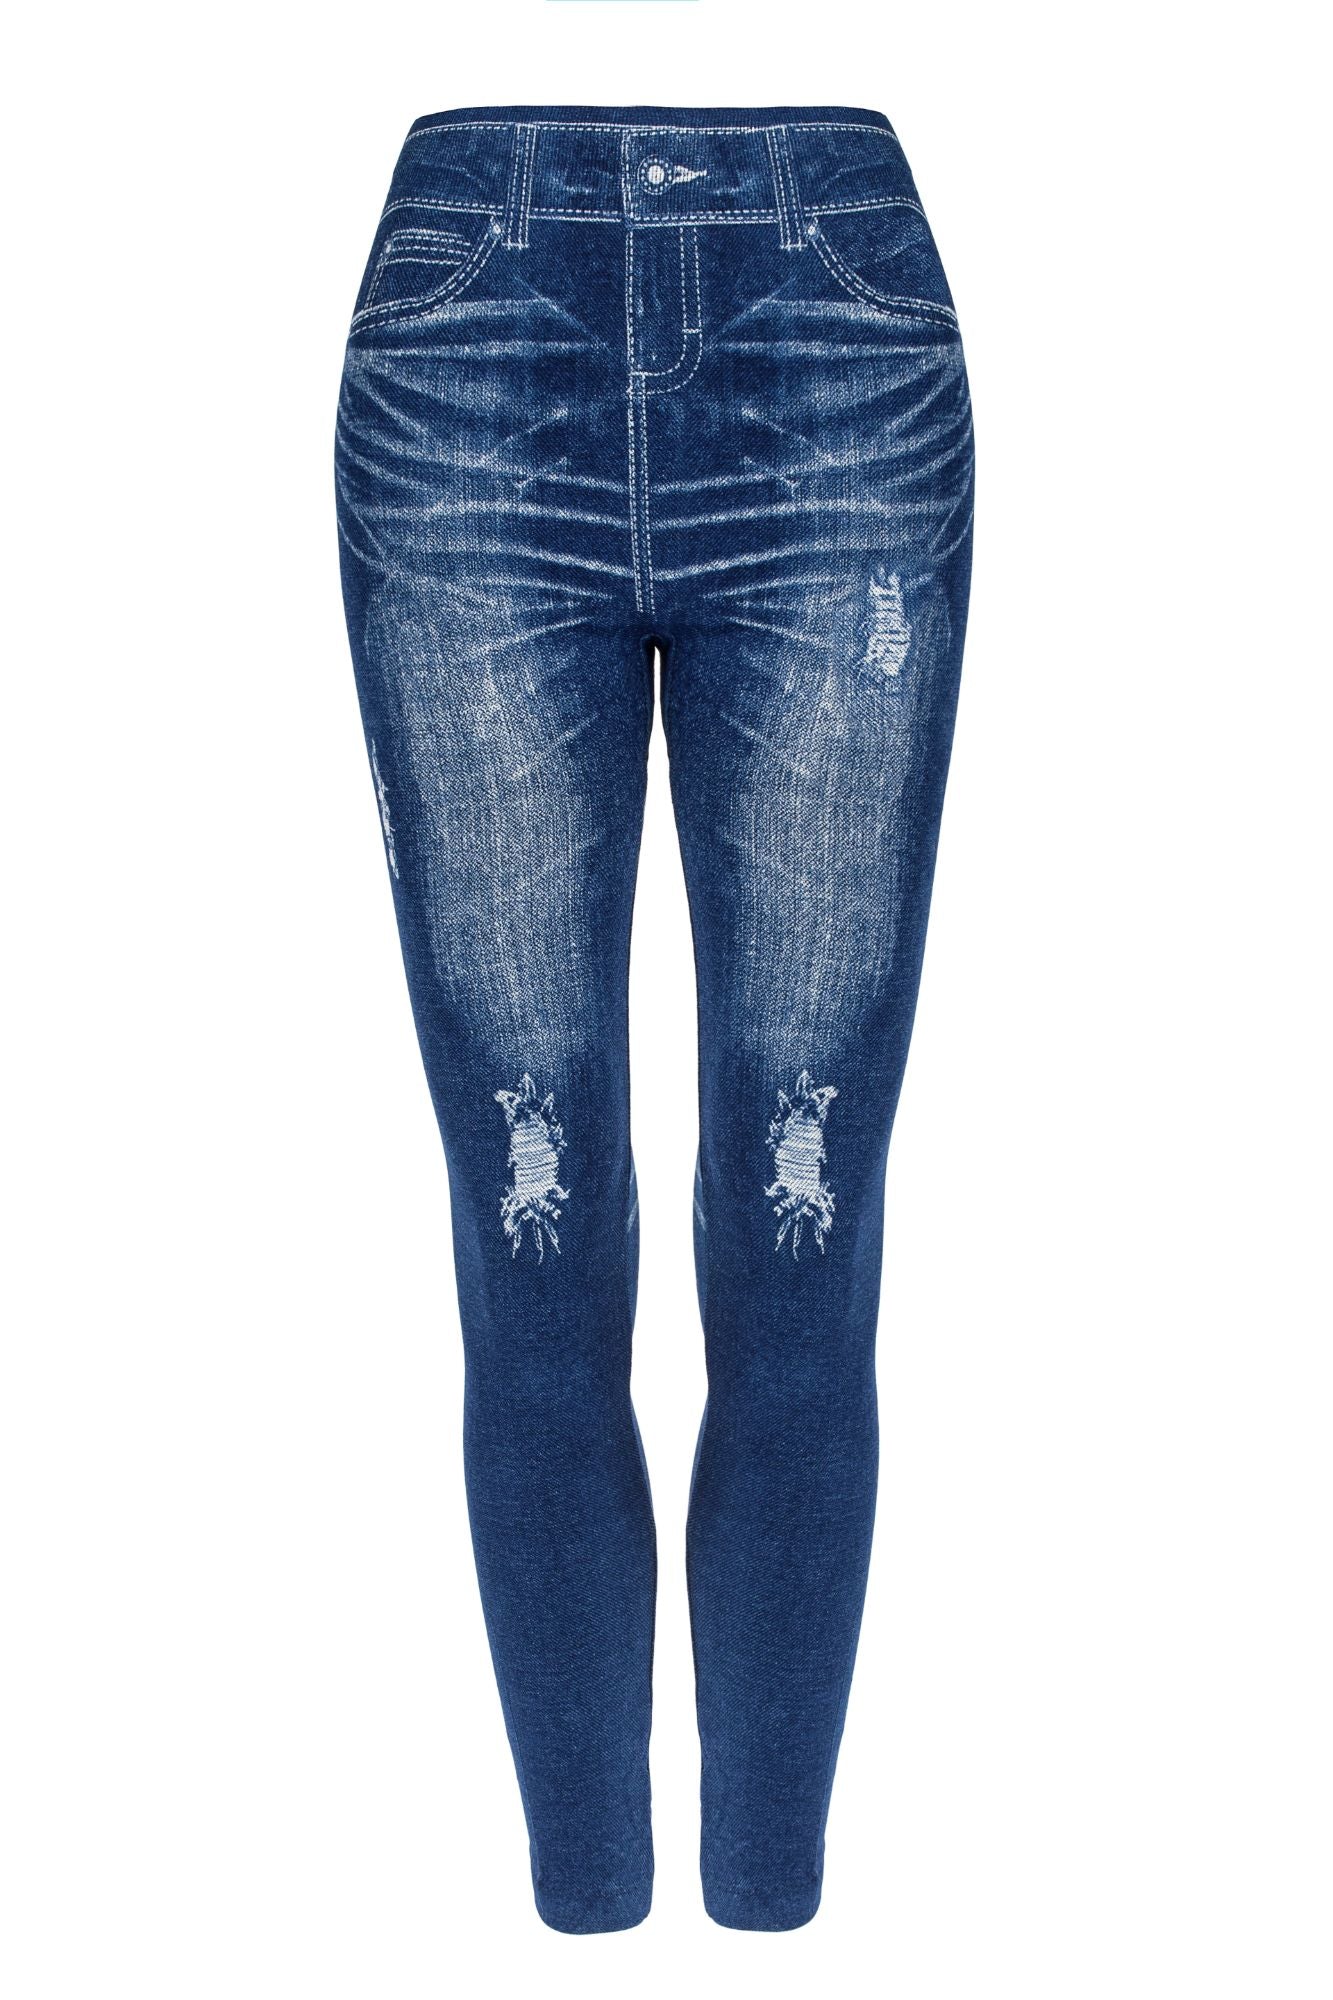 Buy Krystle Girls Distressed Skinny Printed Denim Jegging Leggings Pants  For Age 5-6 Years at Amazon.in